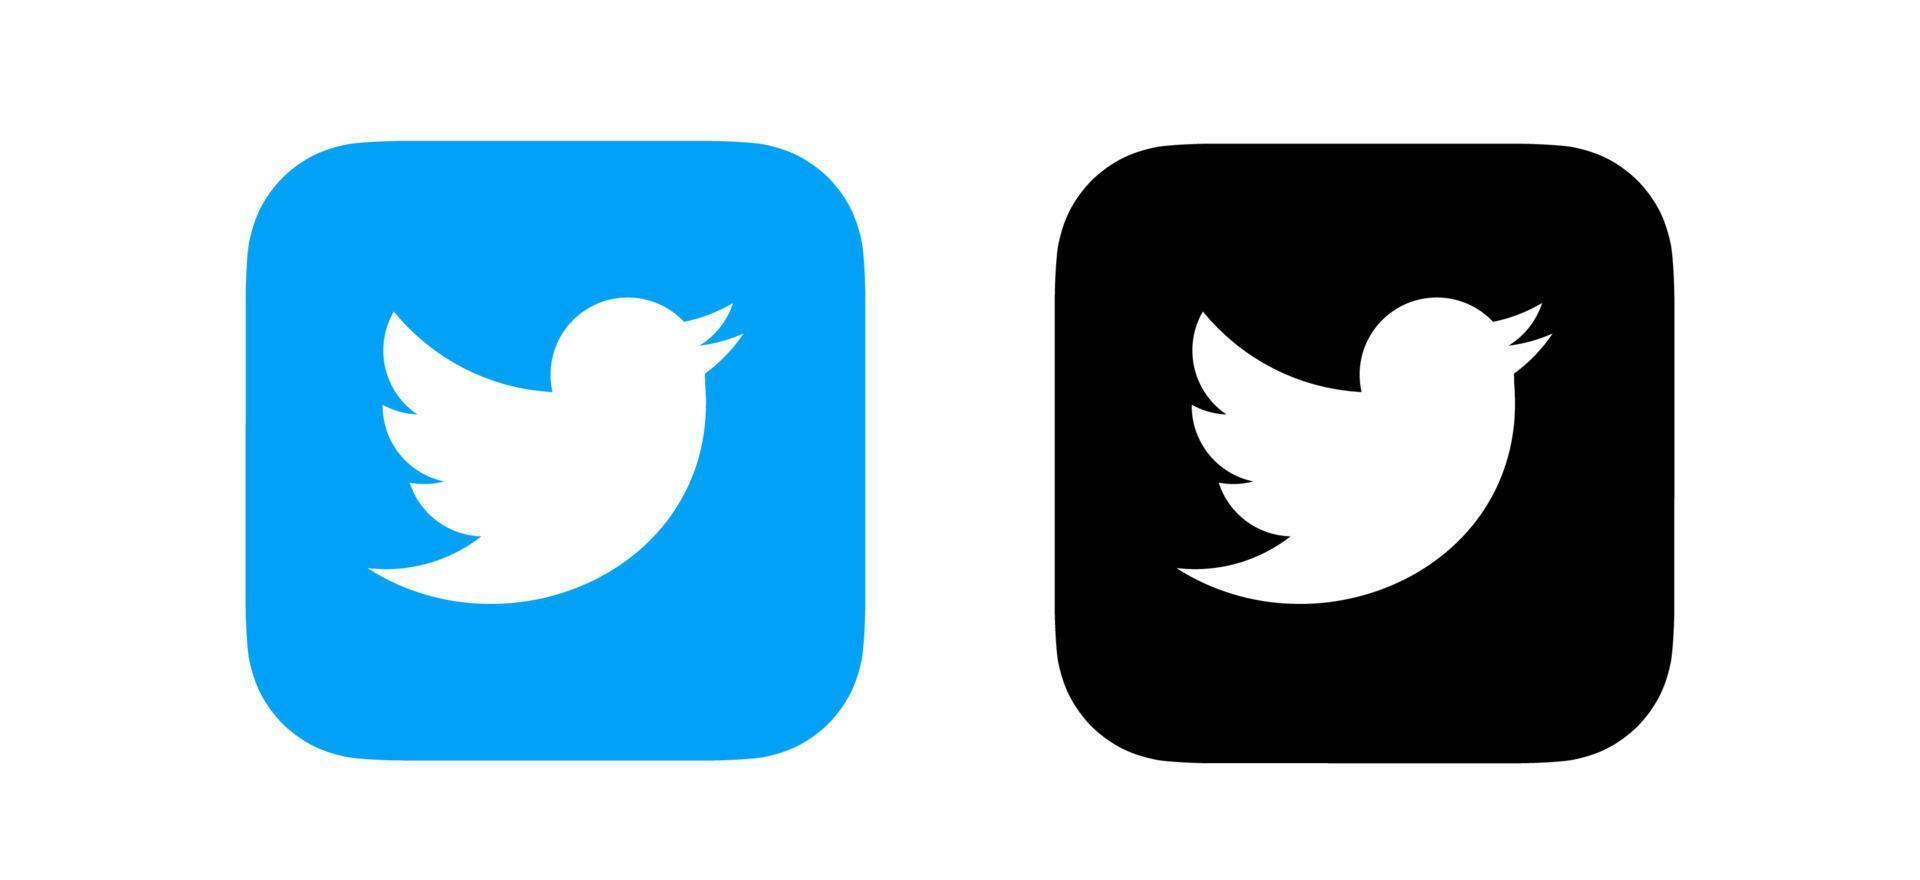 Twitter logo, Twitter icon vector, Twitter symbol free vector ...